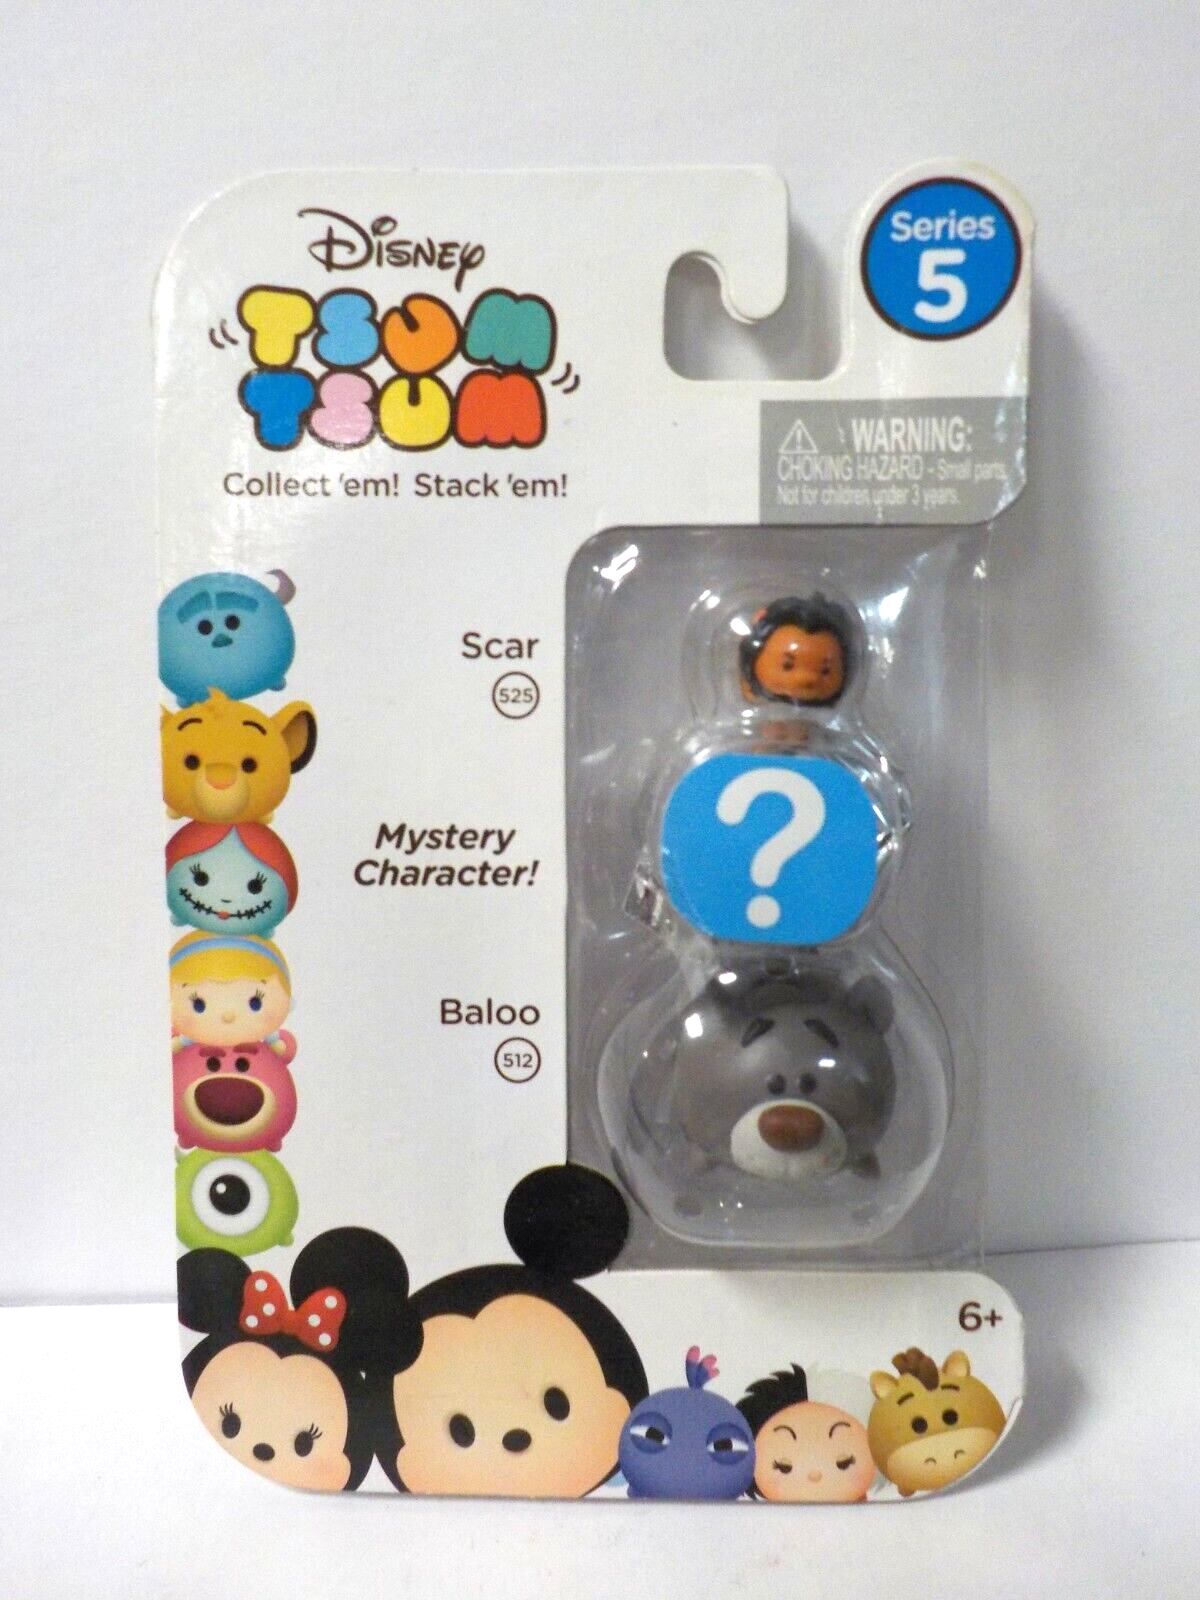 C1013 Disney Tsum Tsum Set "Scar, Mystery, Baloo (Series 5)" Stacking Toys (NEW)